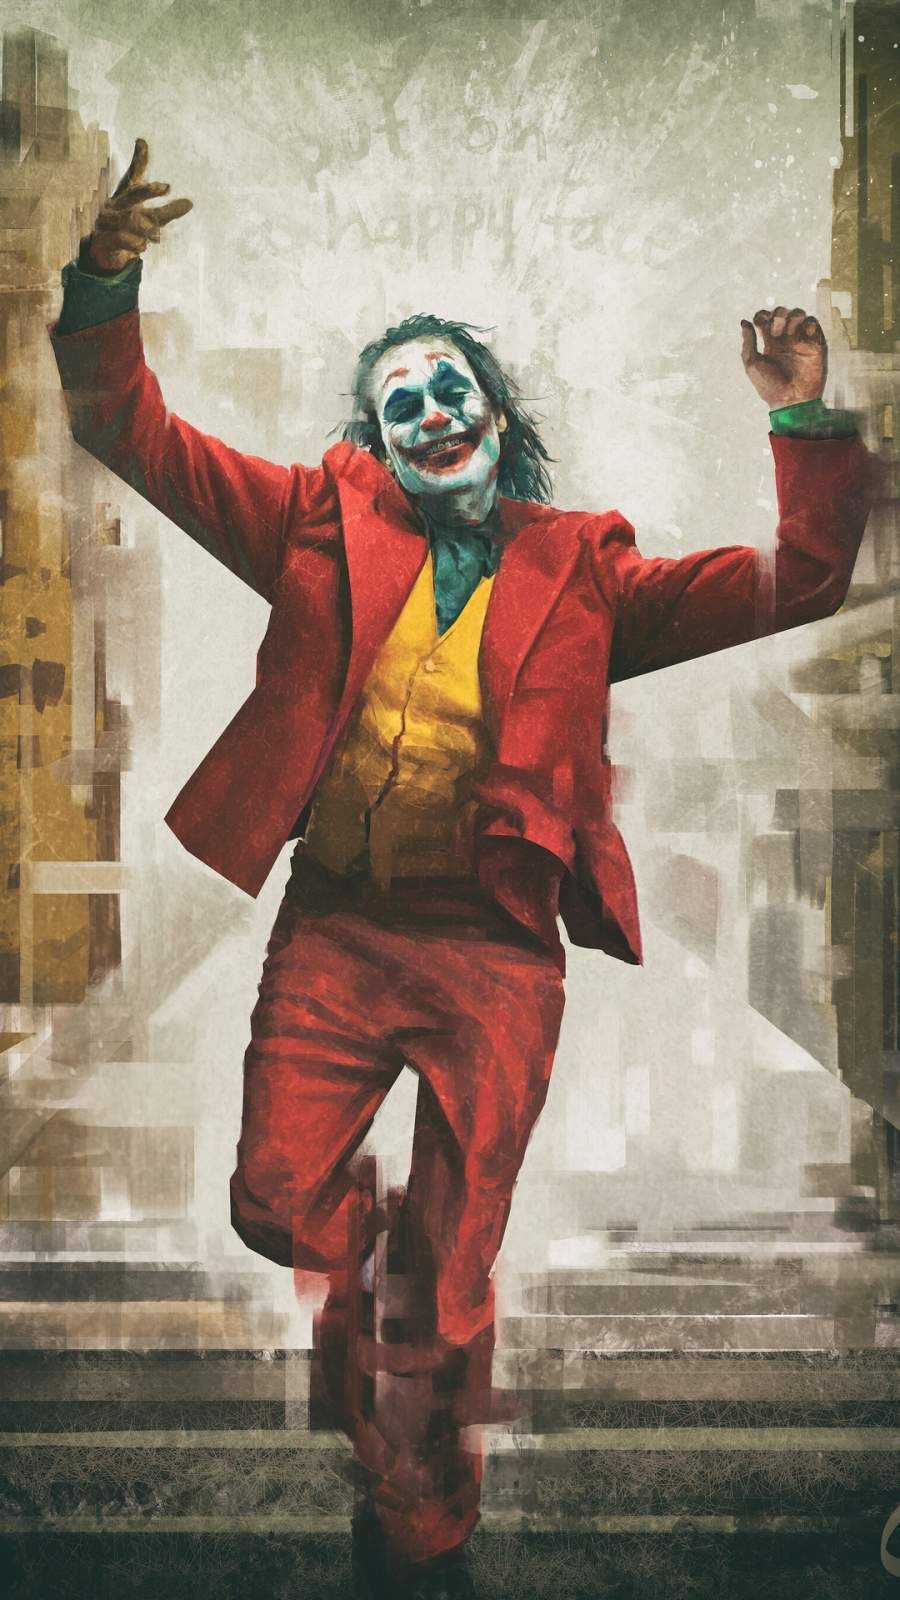 Joker Happy Face iPhone Wallpaper en 2020. Joker dessin, Joker, Dessin